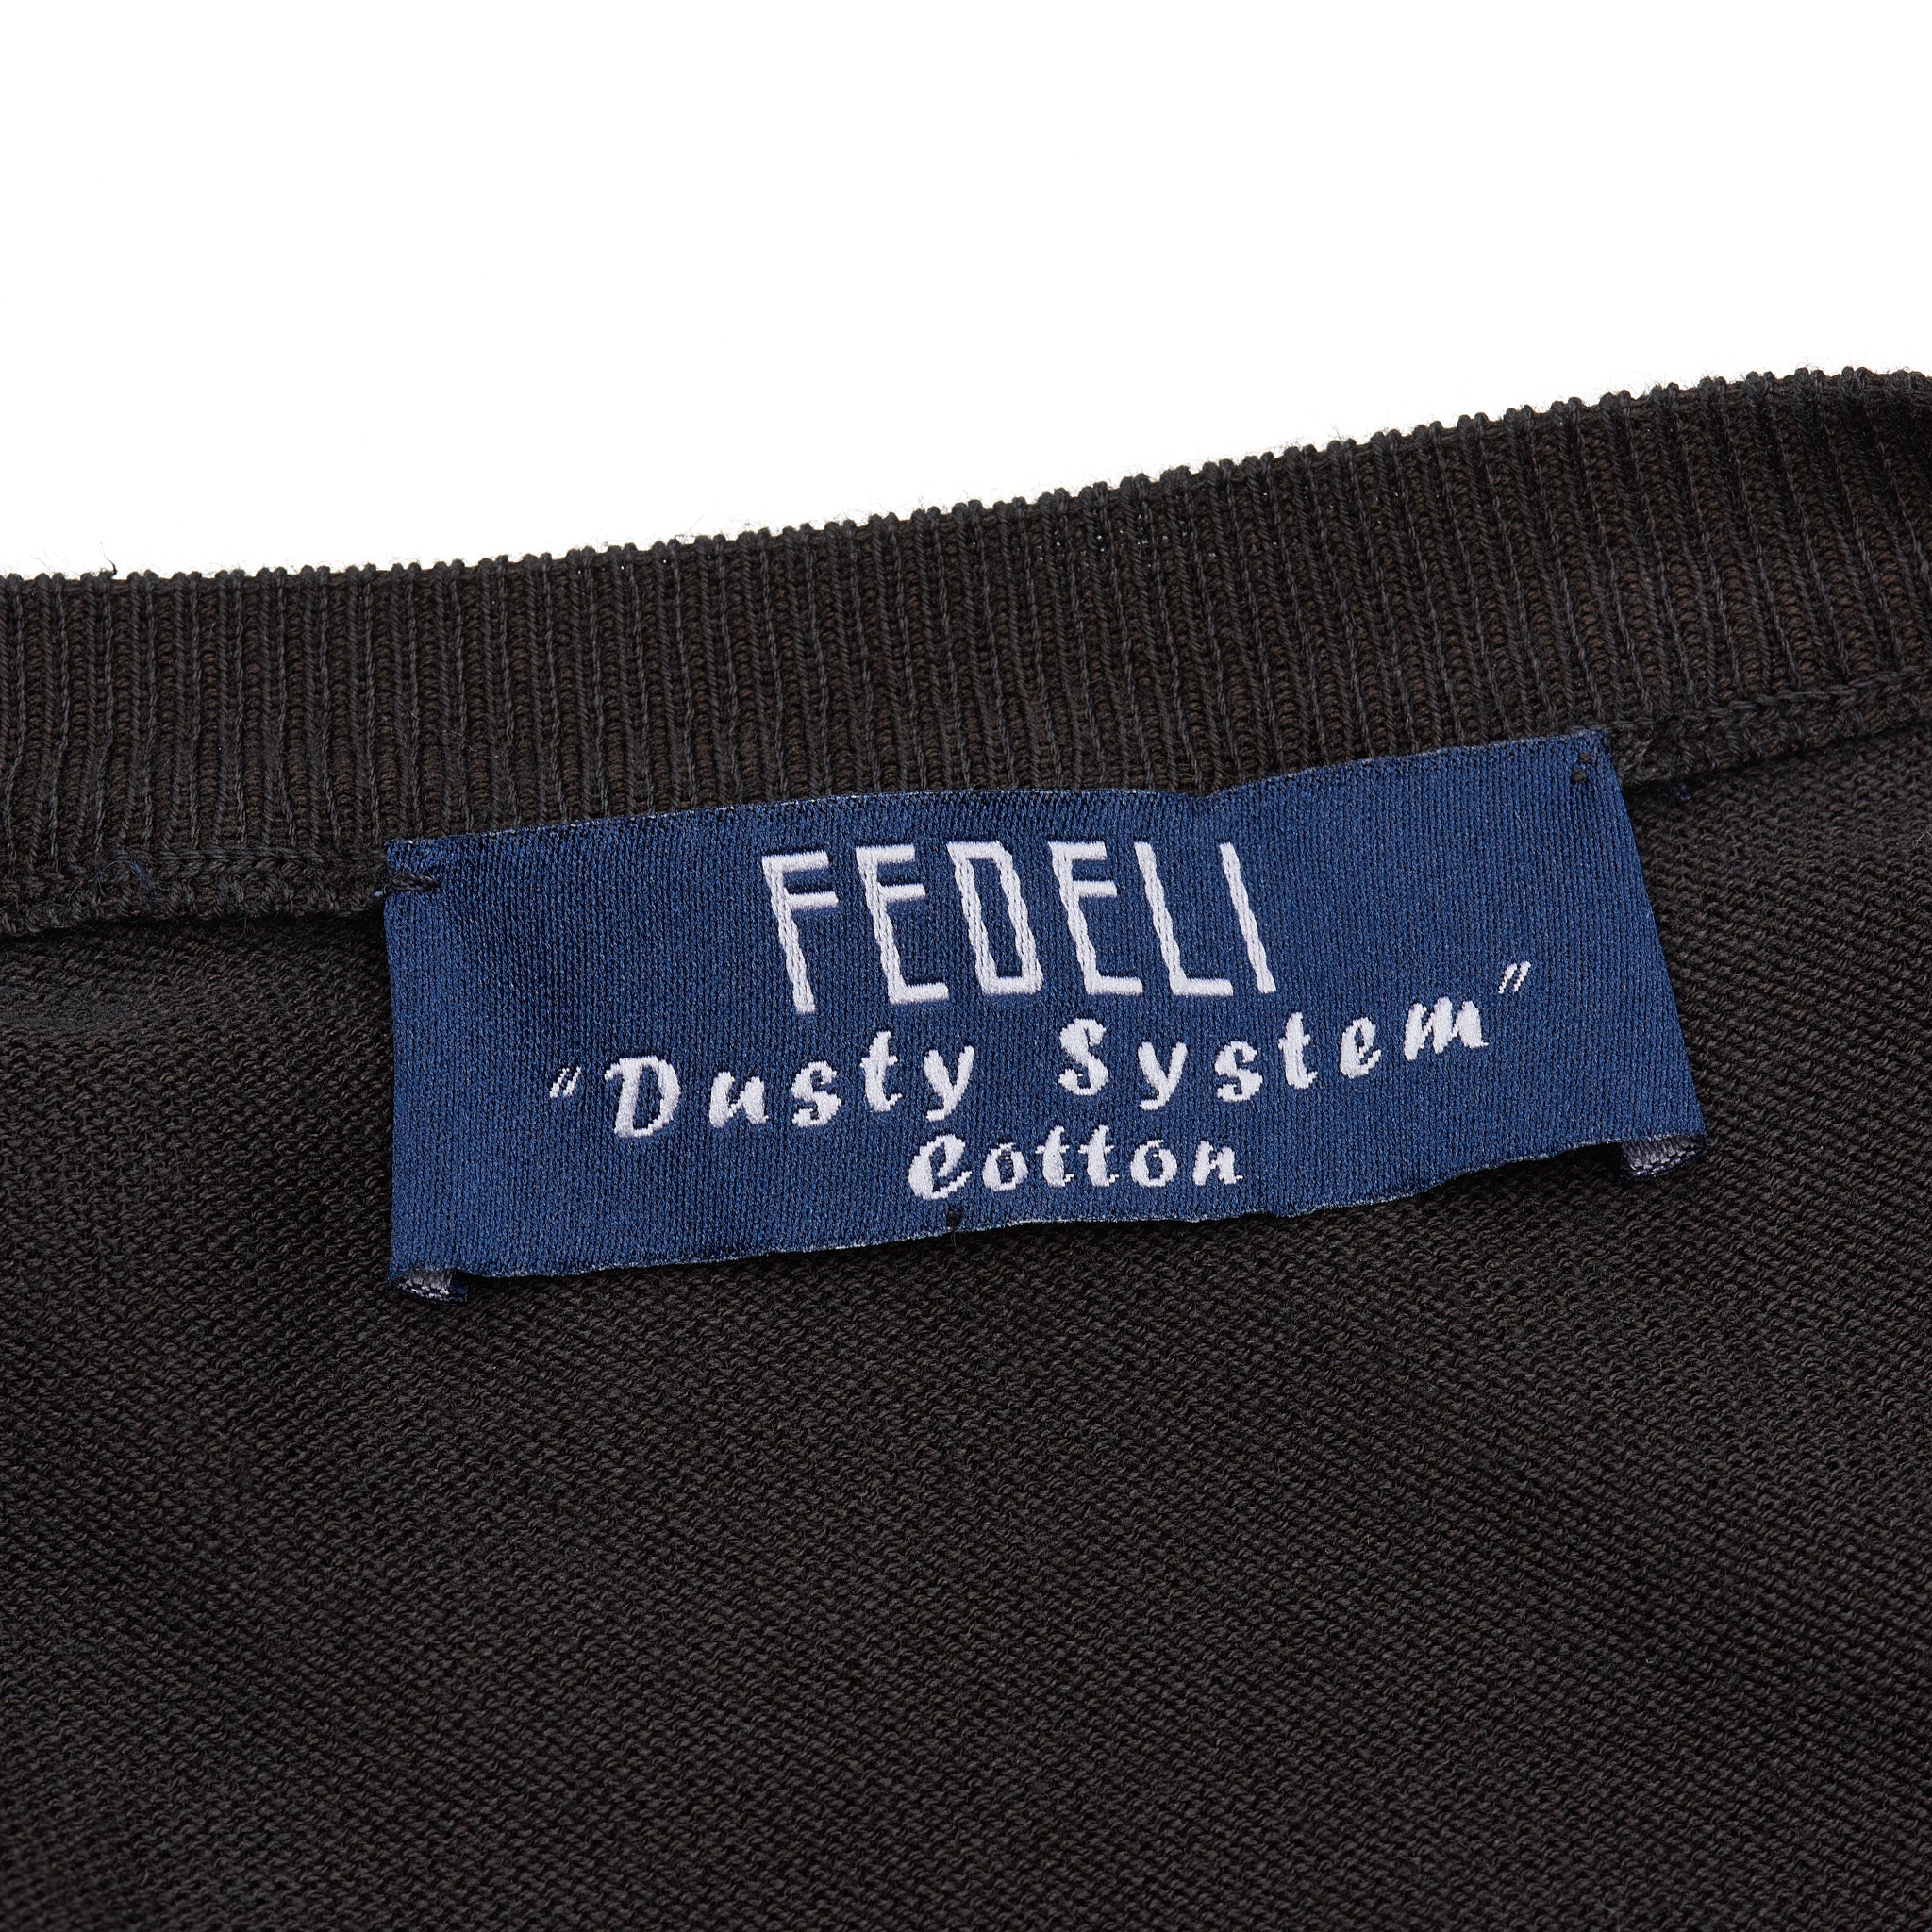 FEDELI Black Garment Dyed Dusty System Cotton V-Neck Sweater 52 NEW L FEDELI